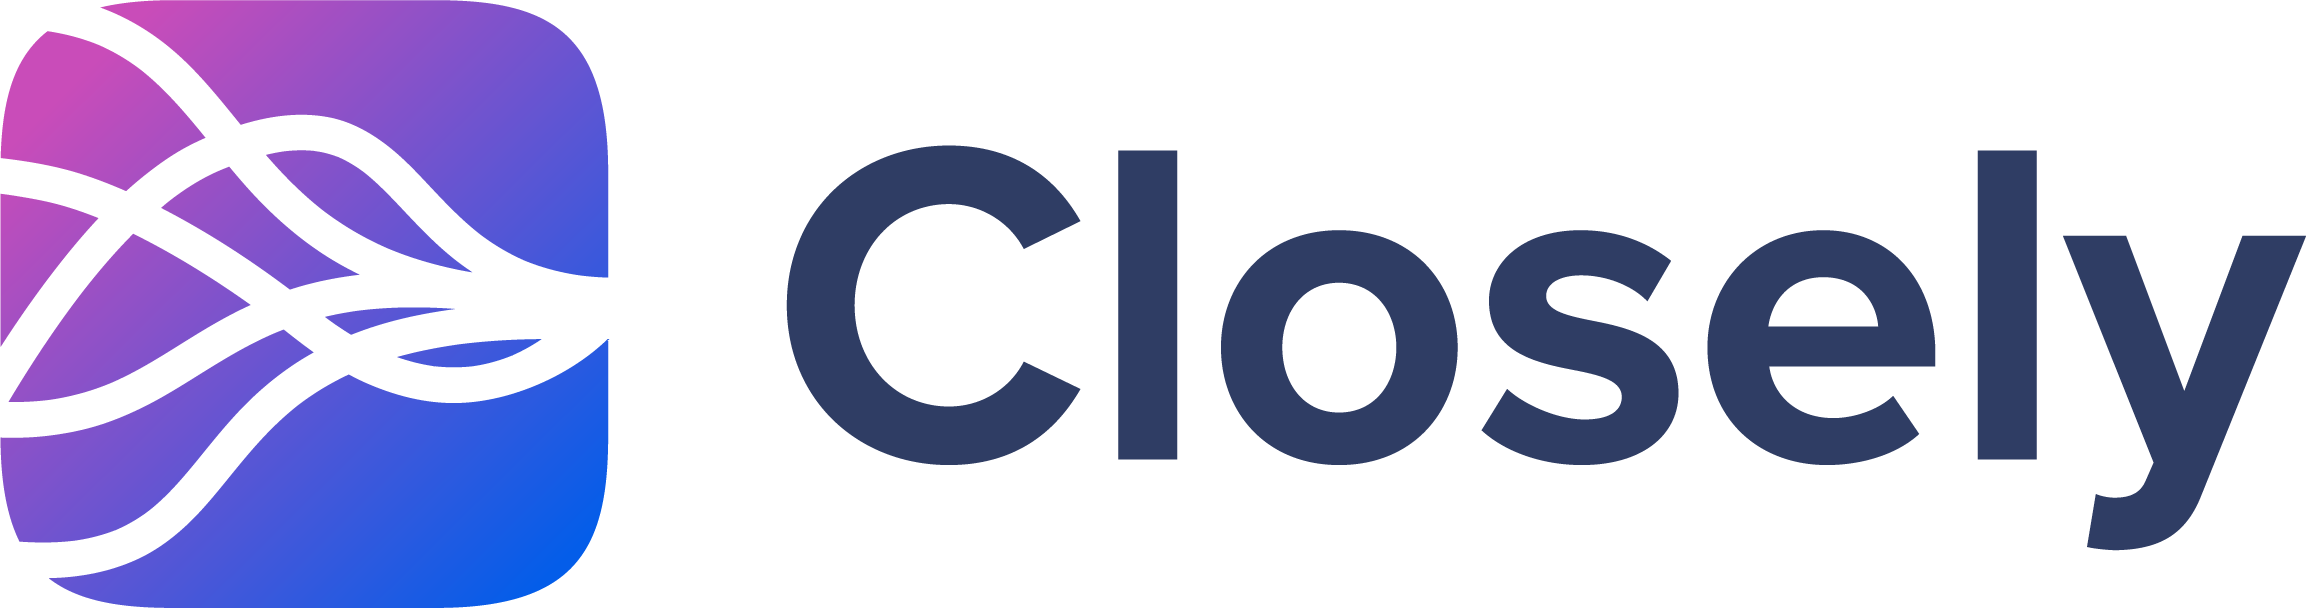 Closely logo